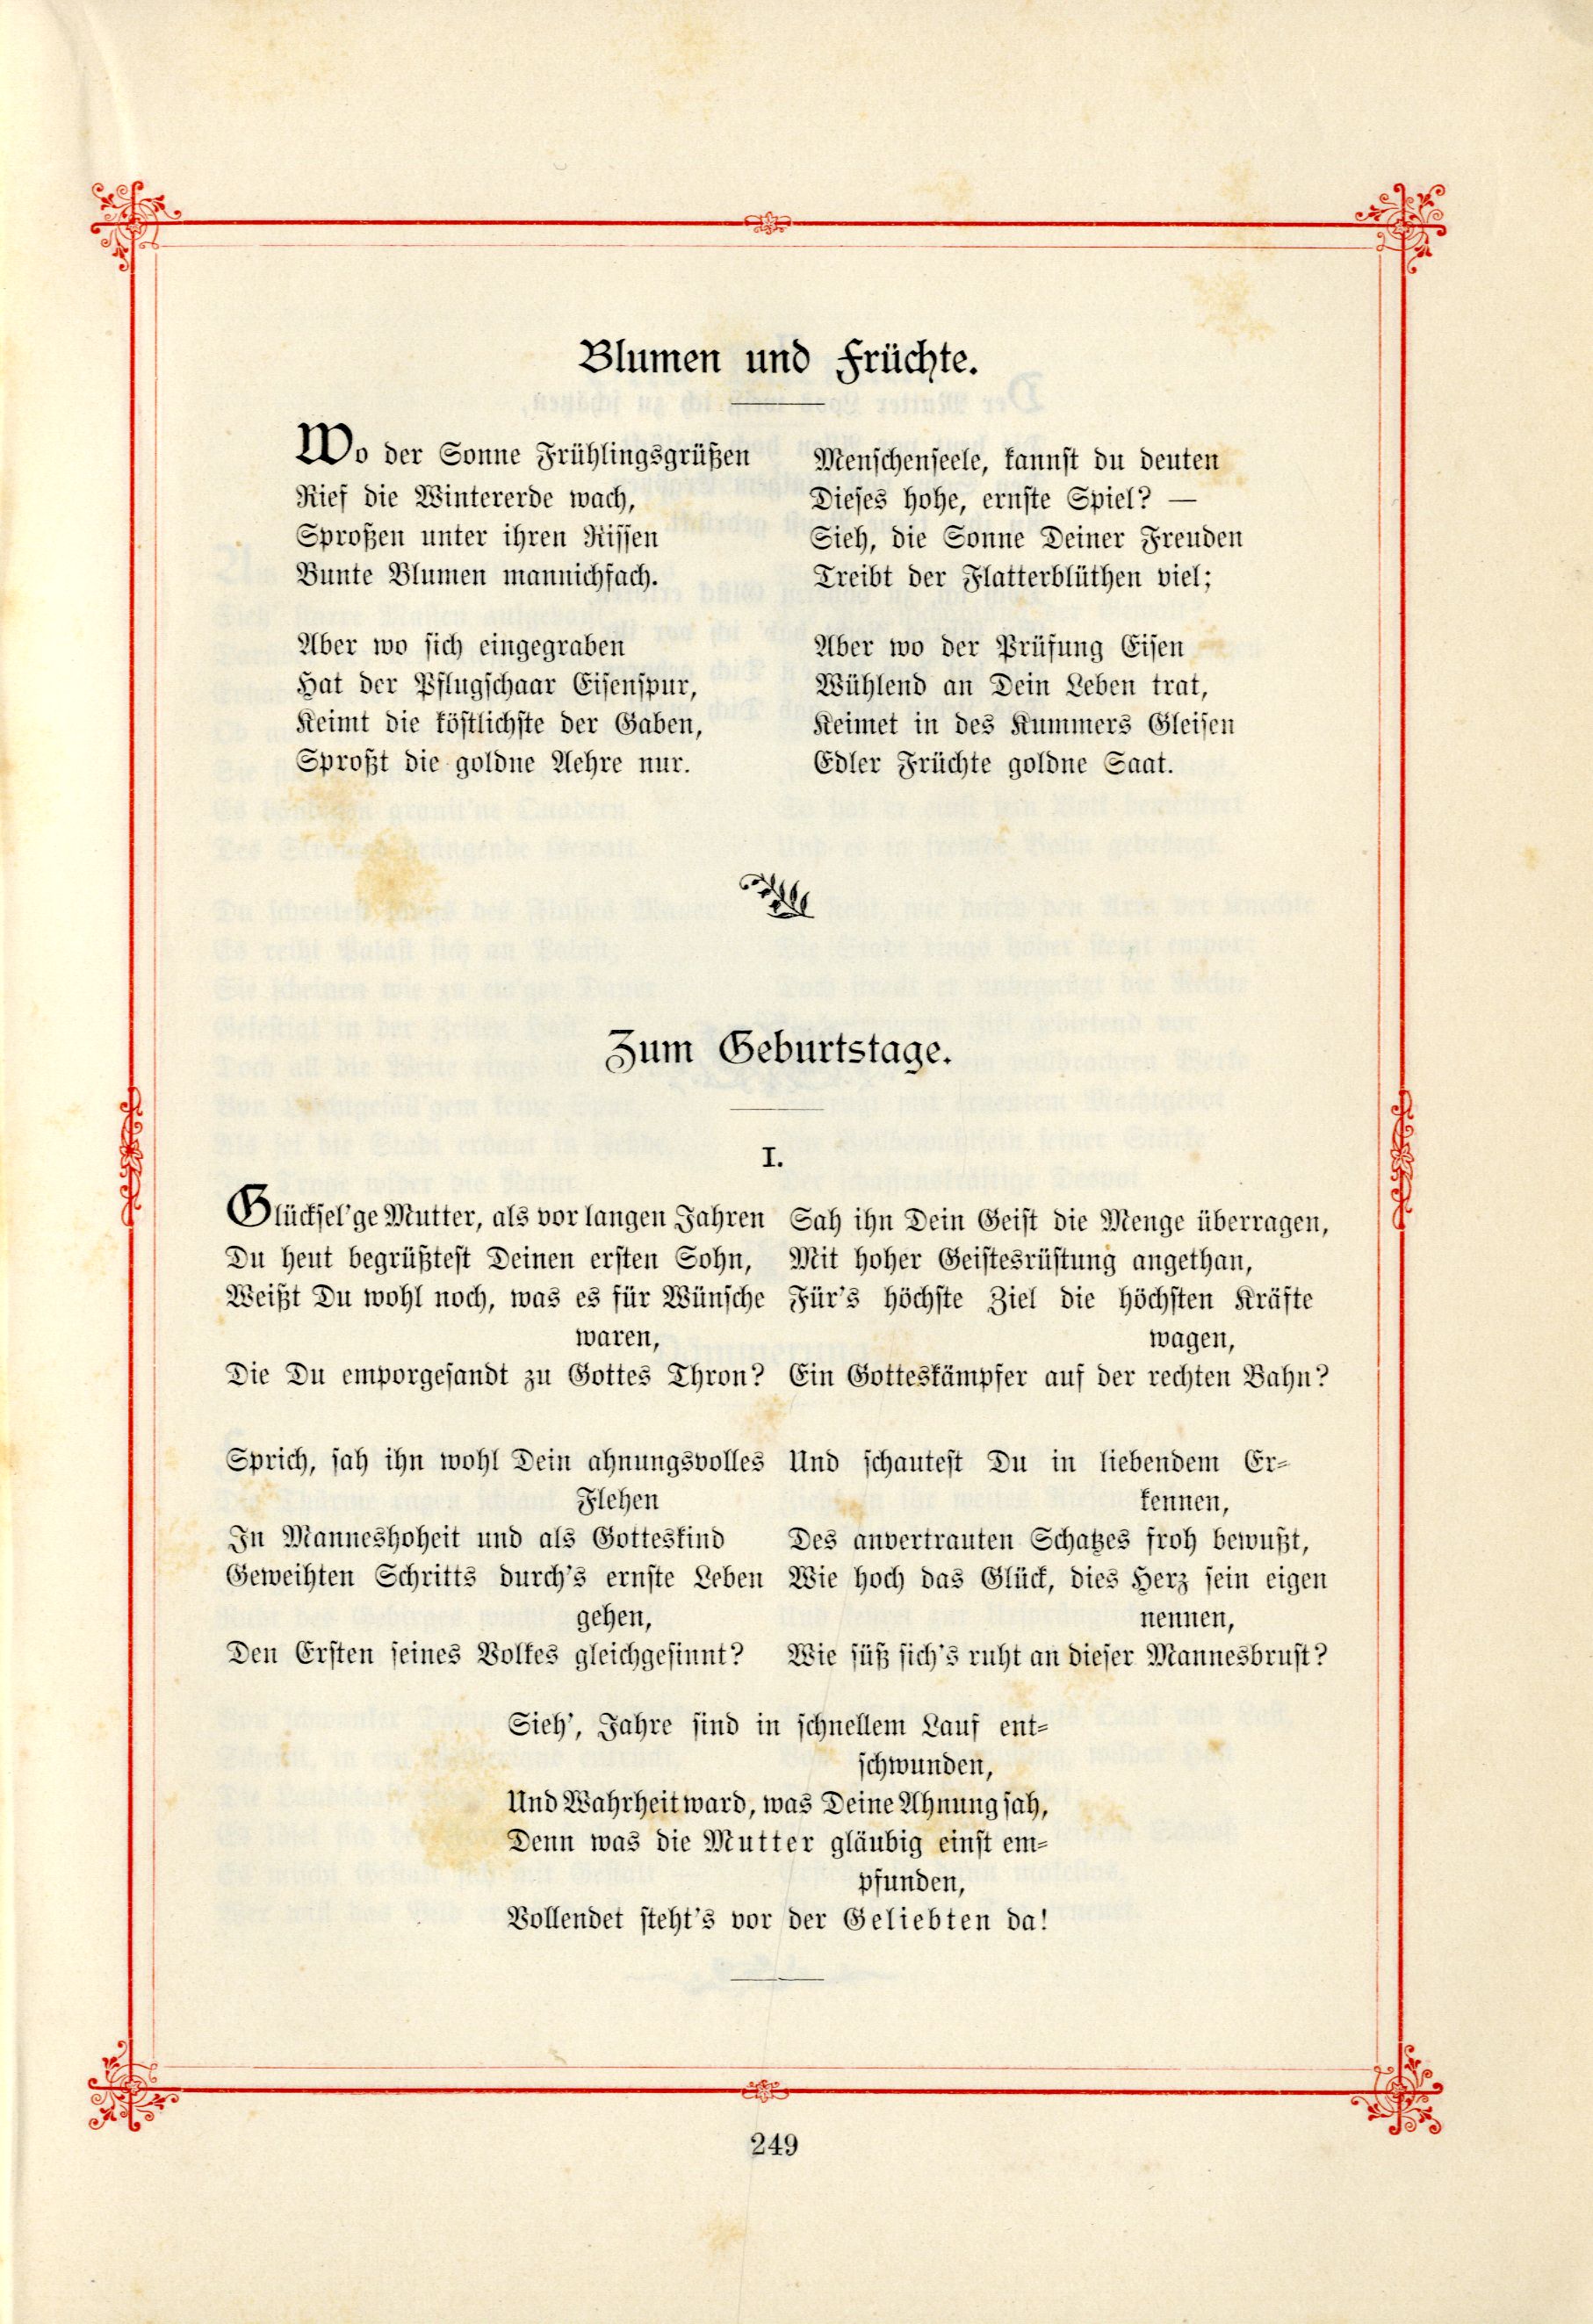 Zum Geburtstage (1895) | 1. (249) Основной текст